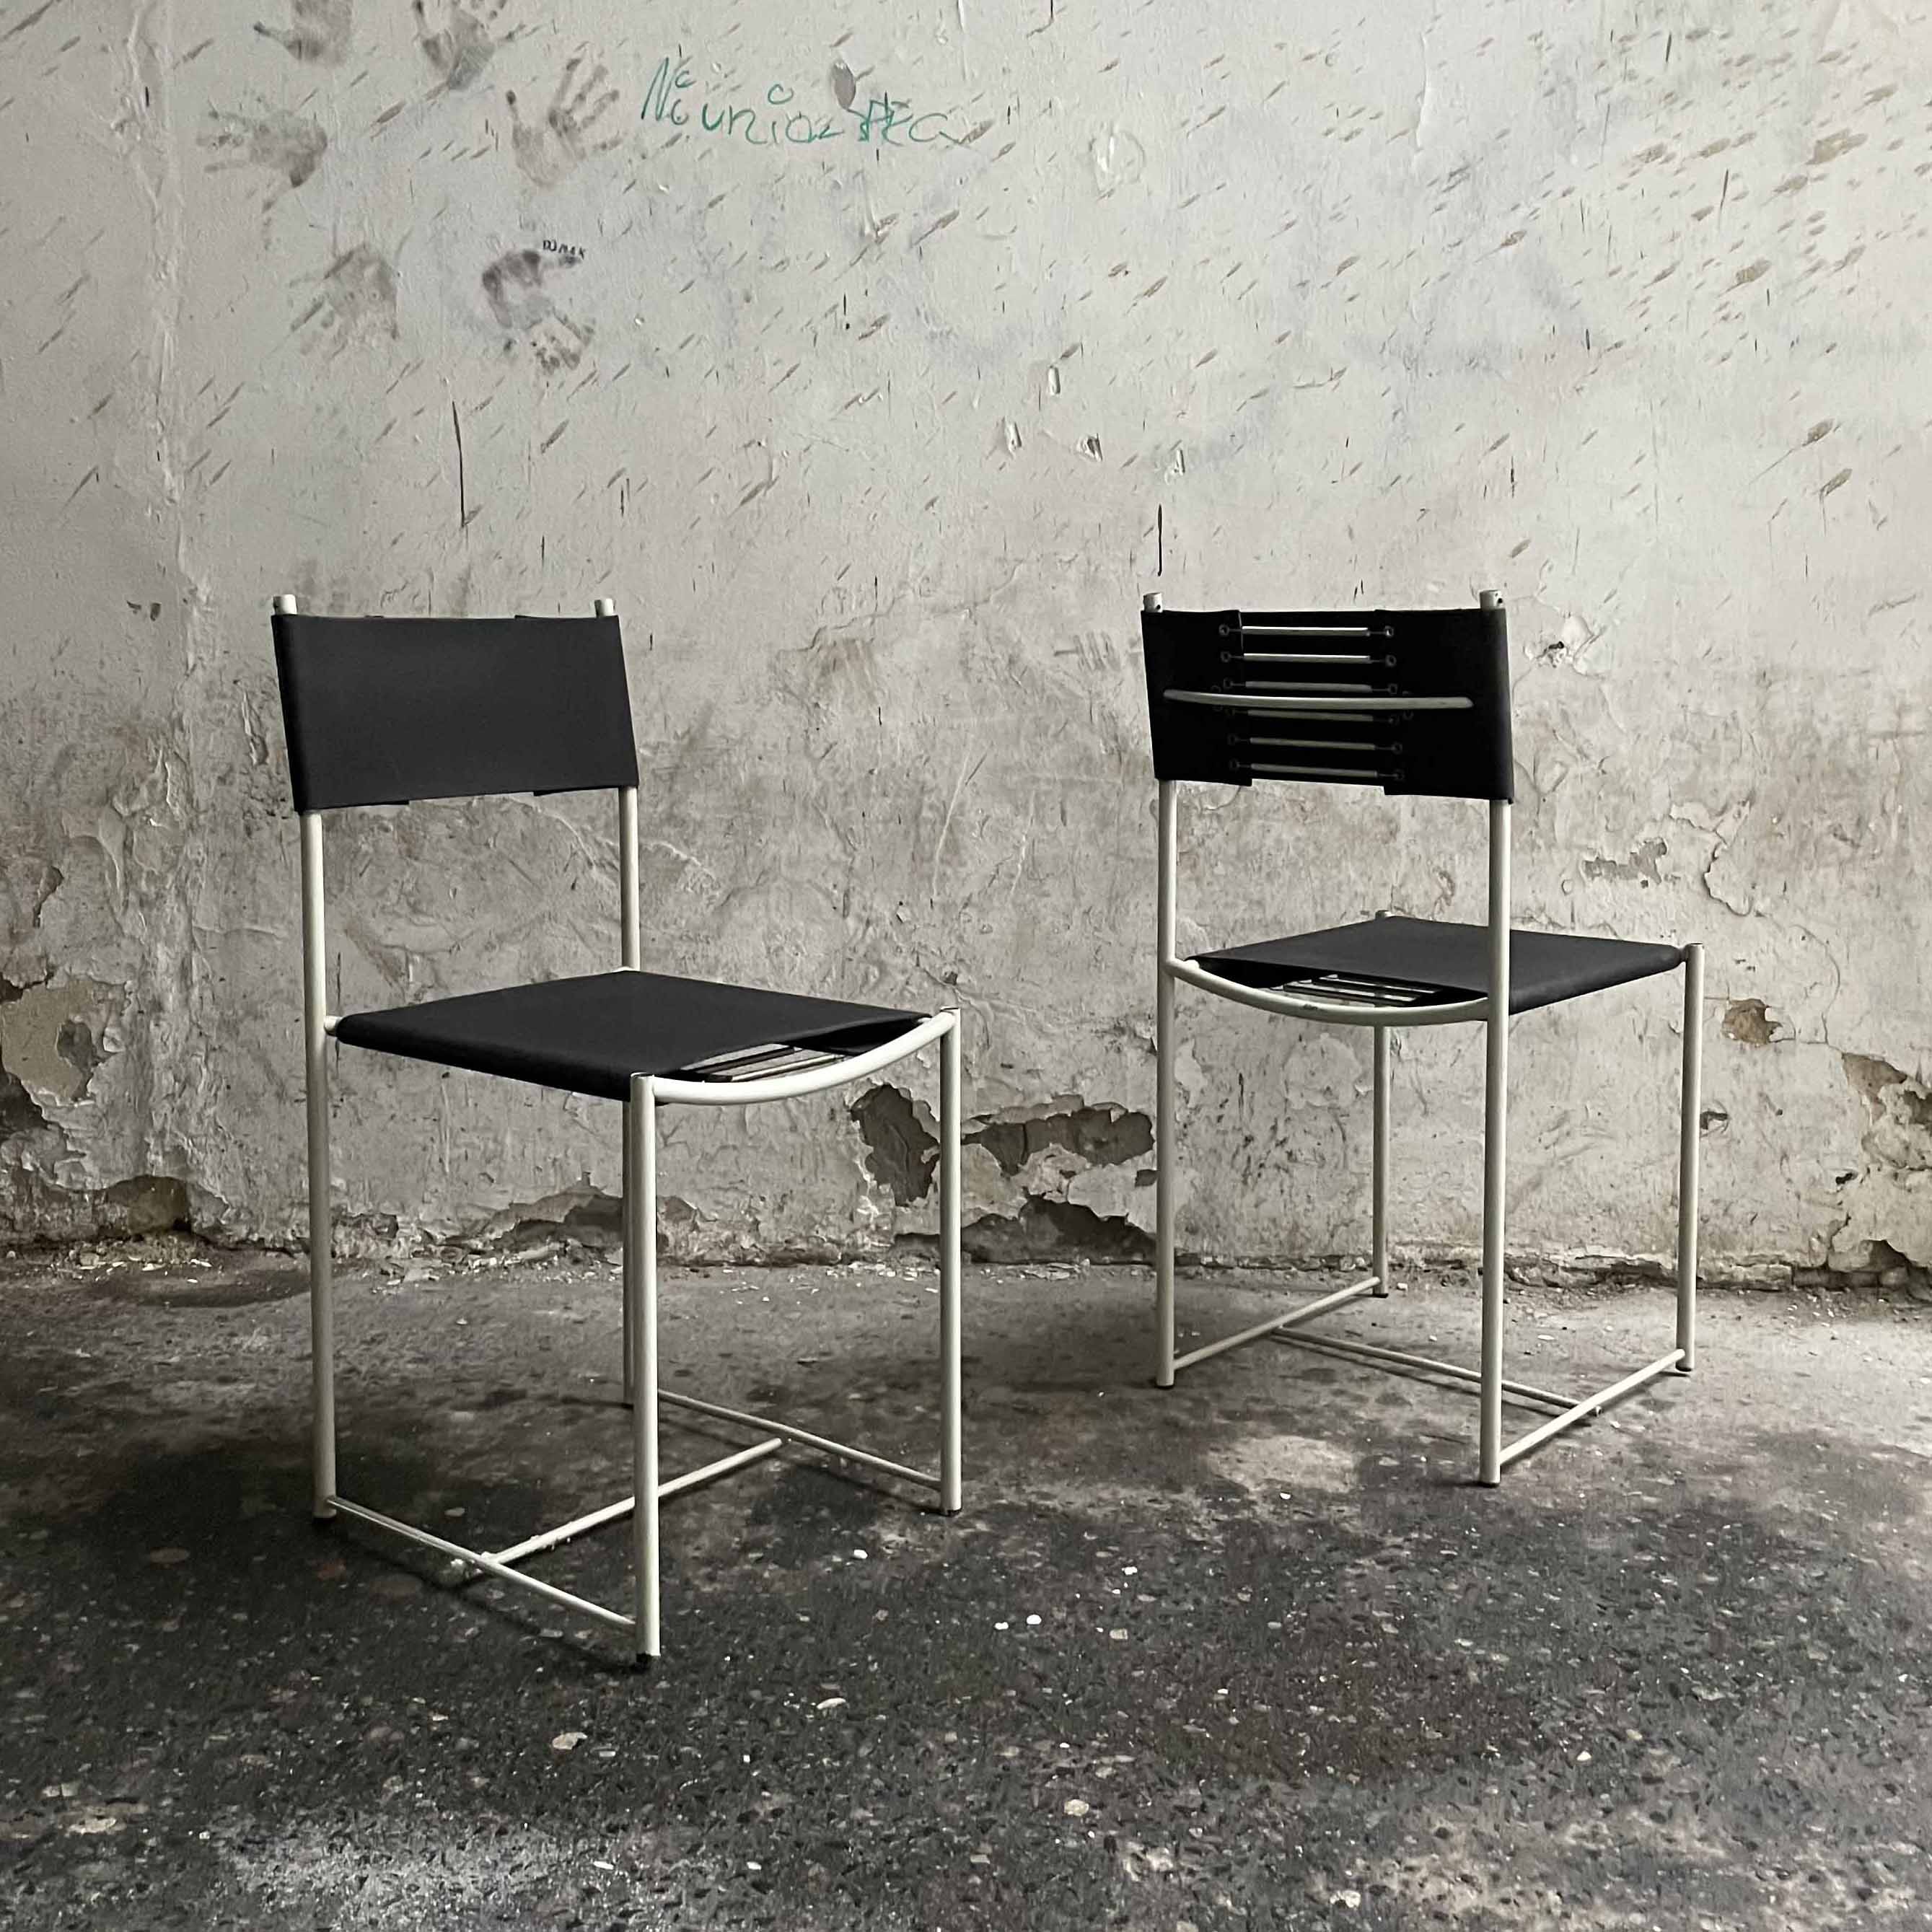 Belotti Alias Postmodern natural leather chair metal mid century krzeslarz vintage warszawa